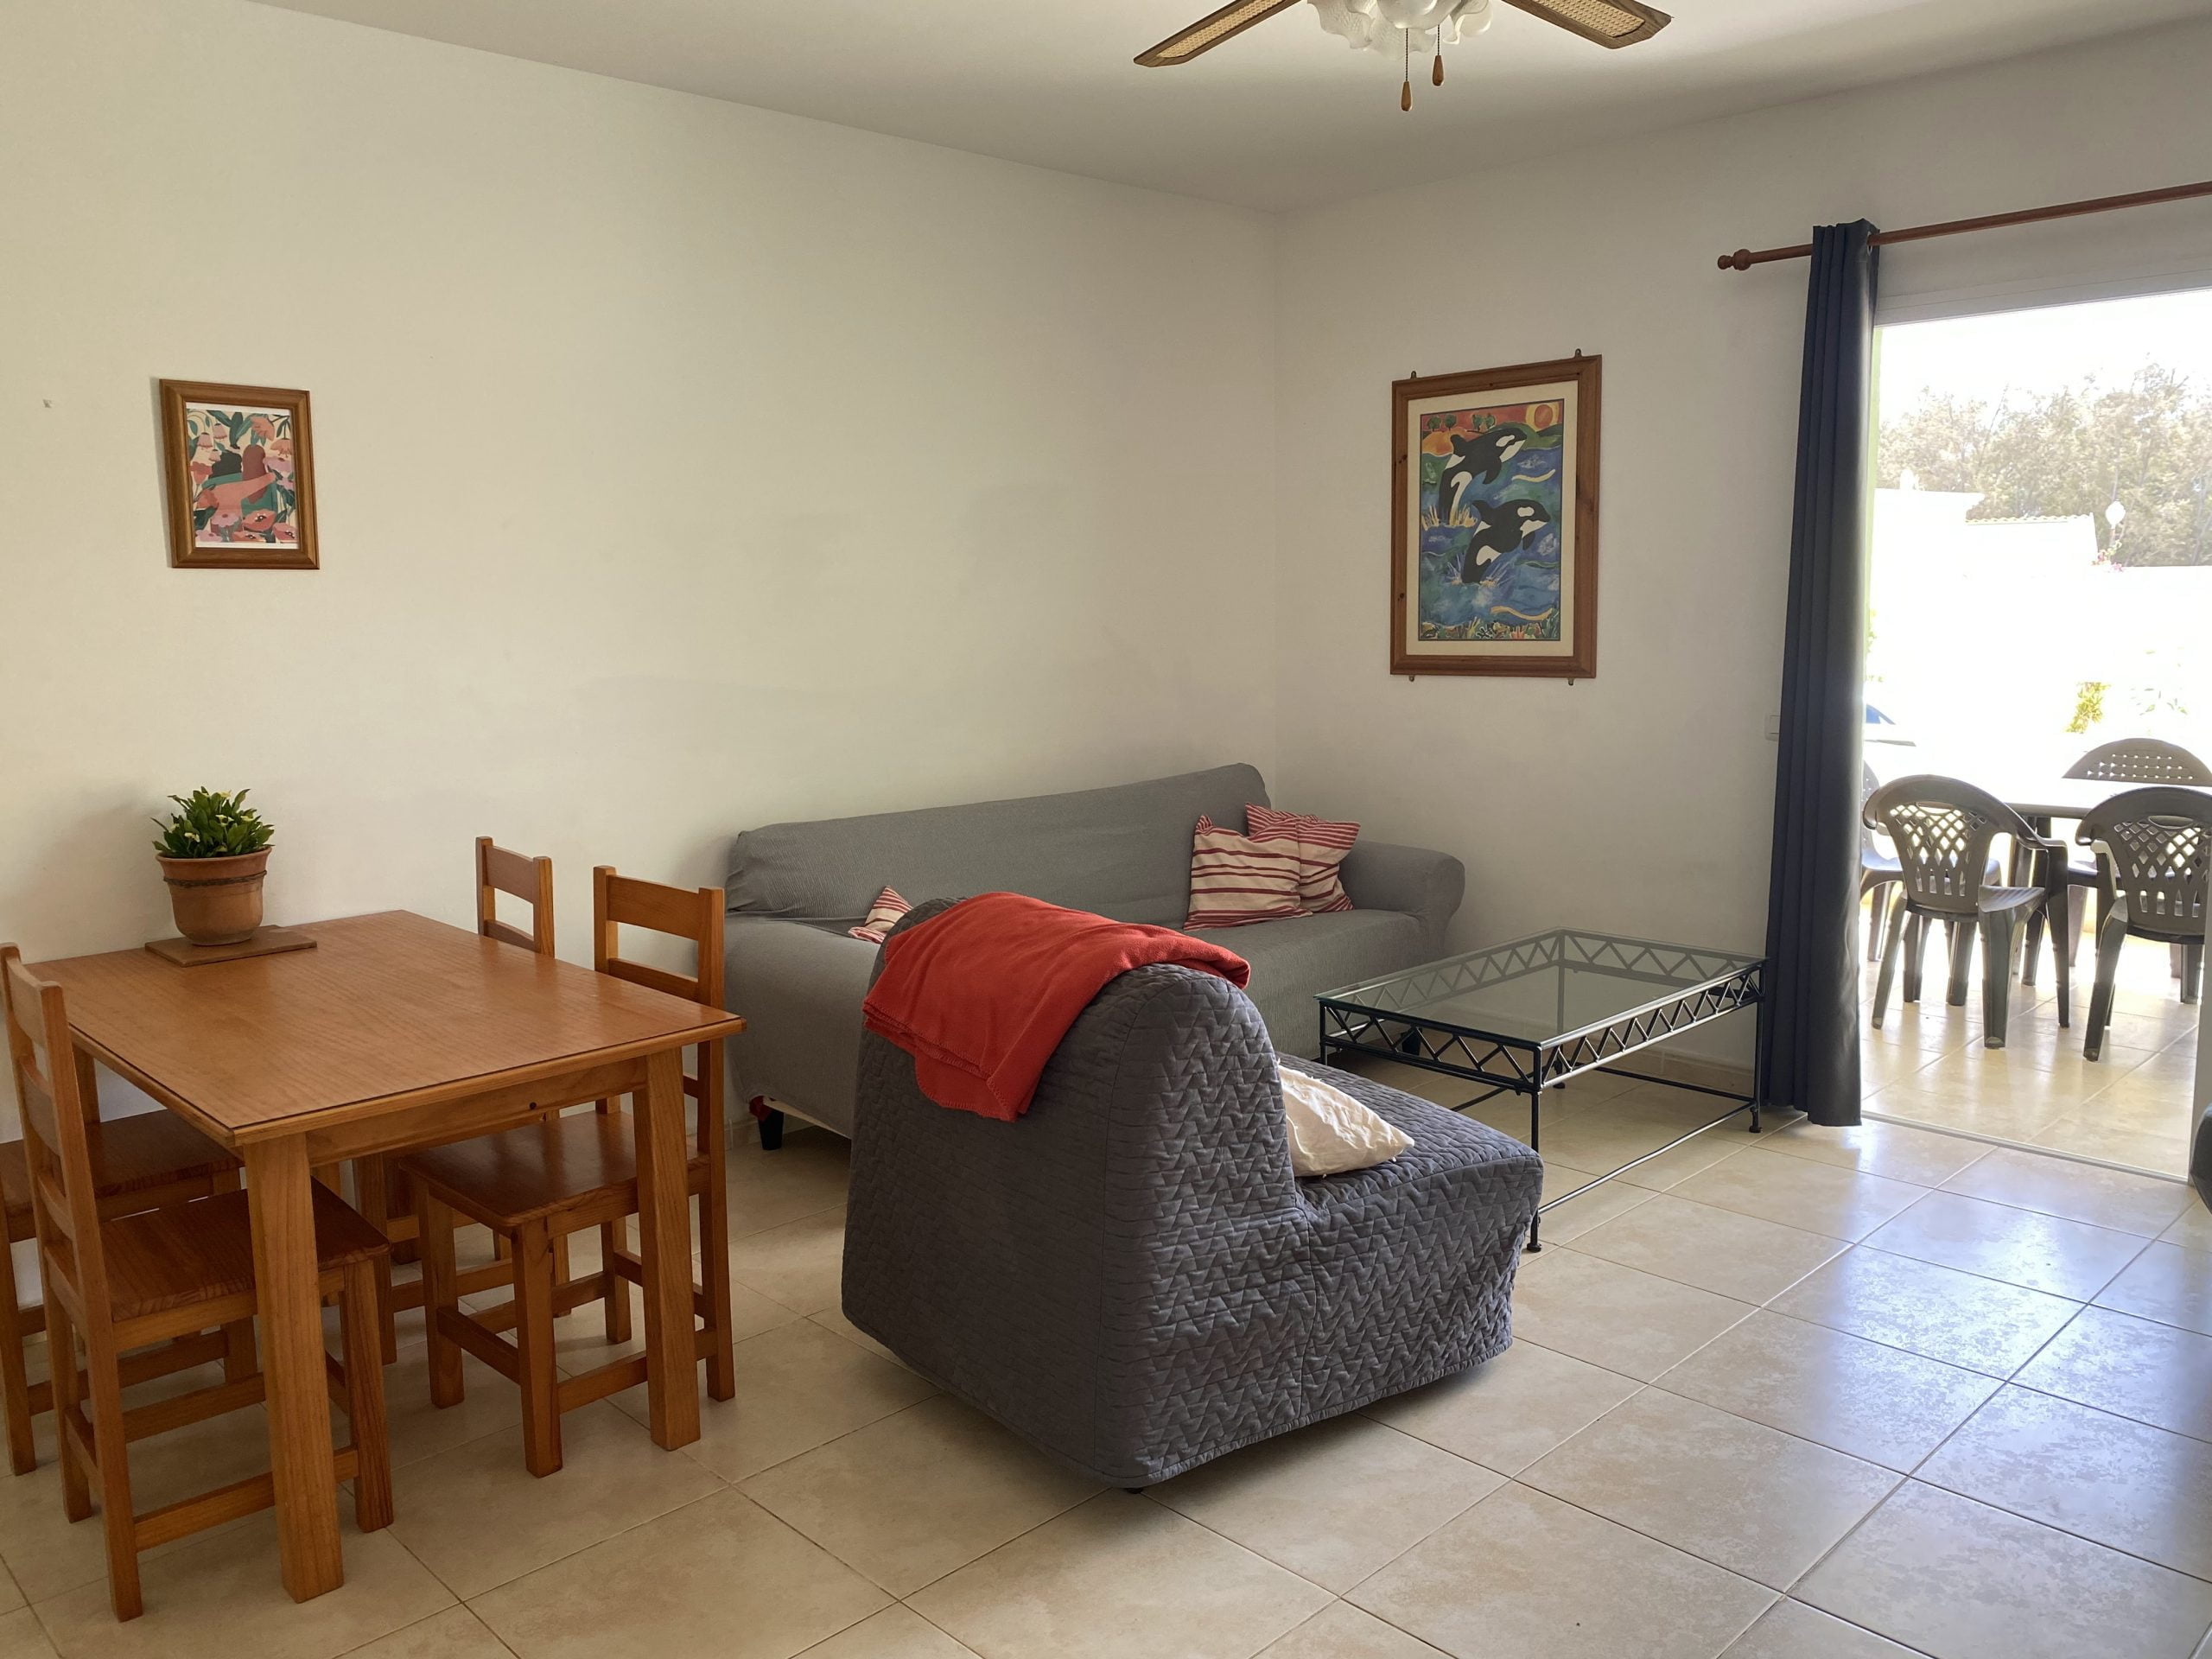 Calma - Furnished expat housing on Fuerteventura